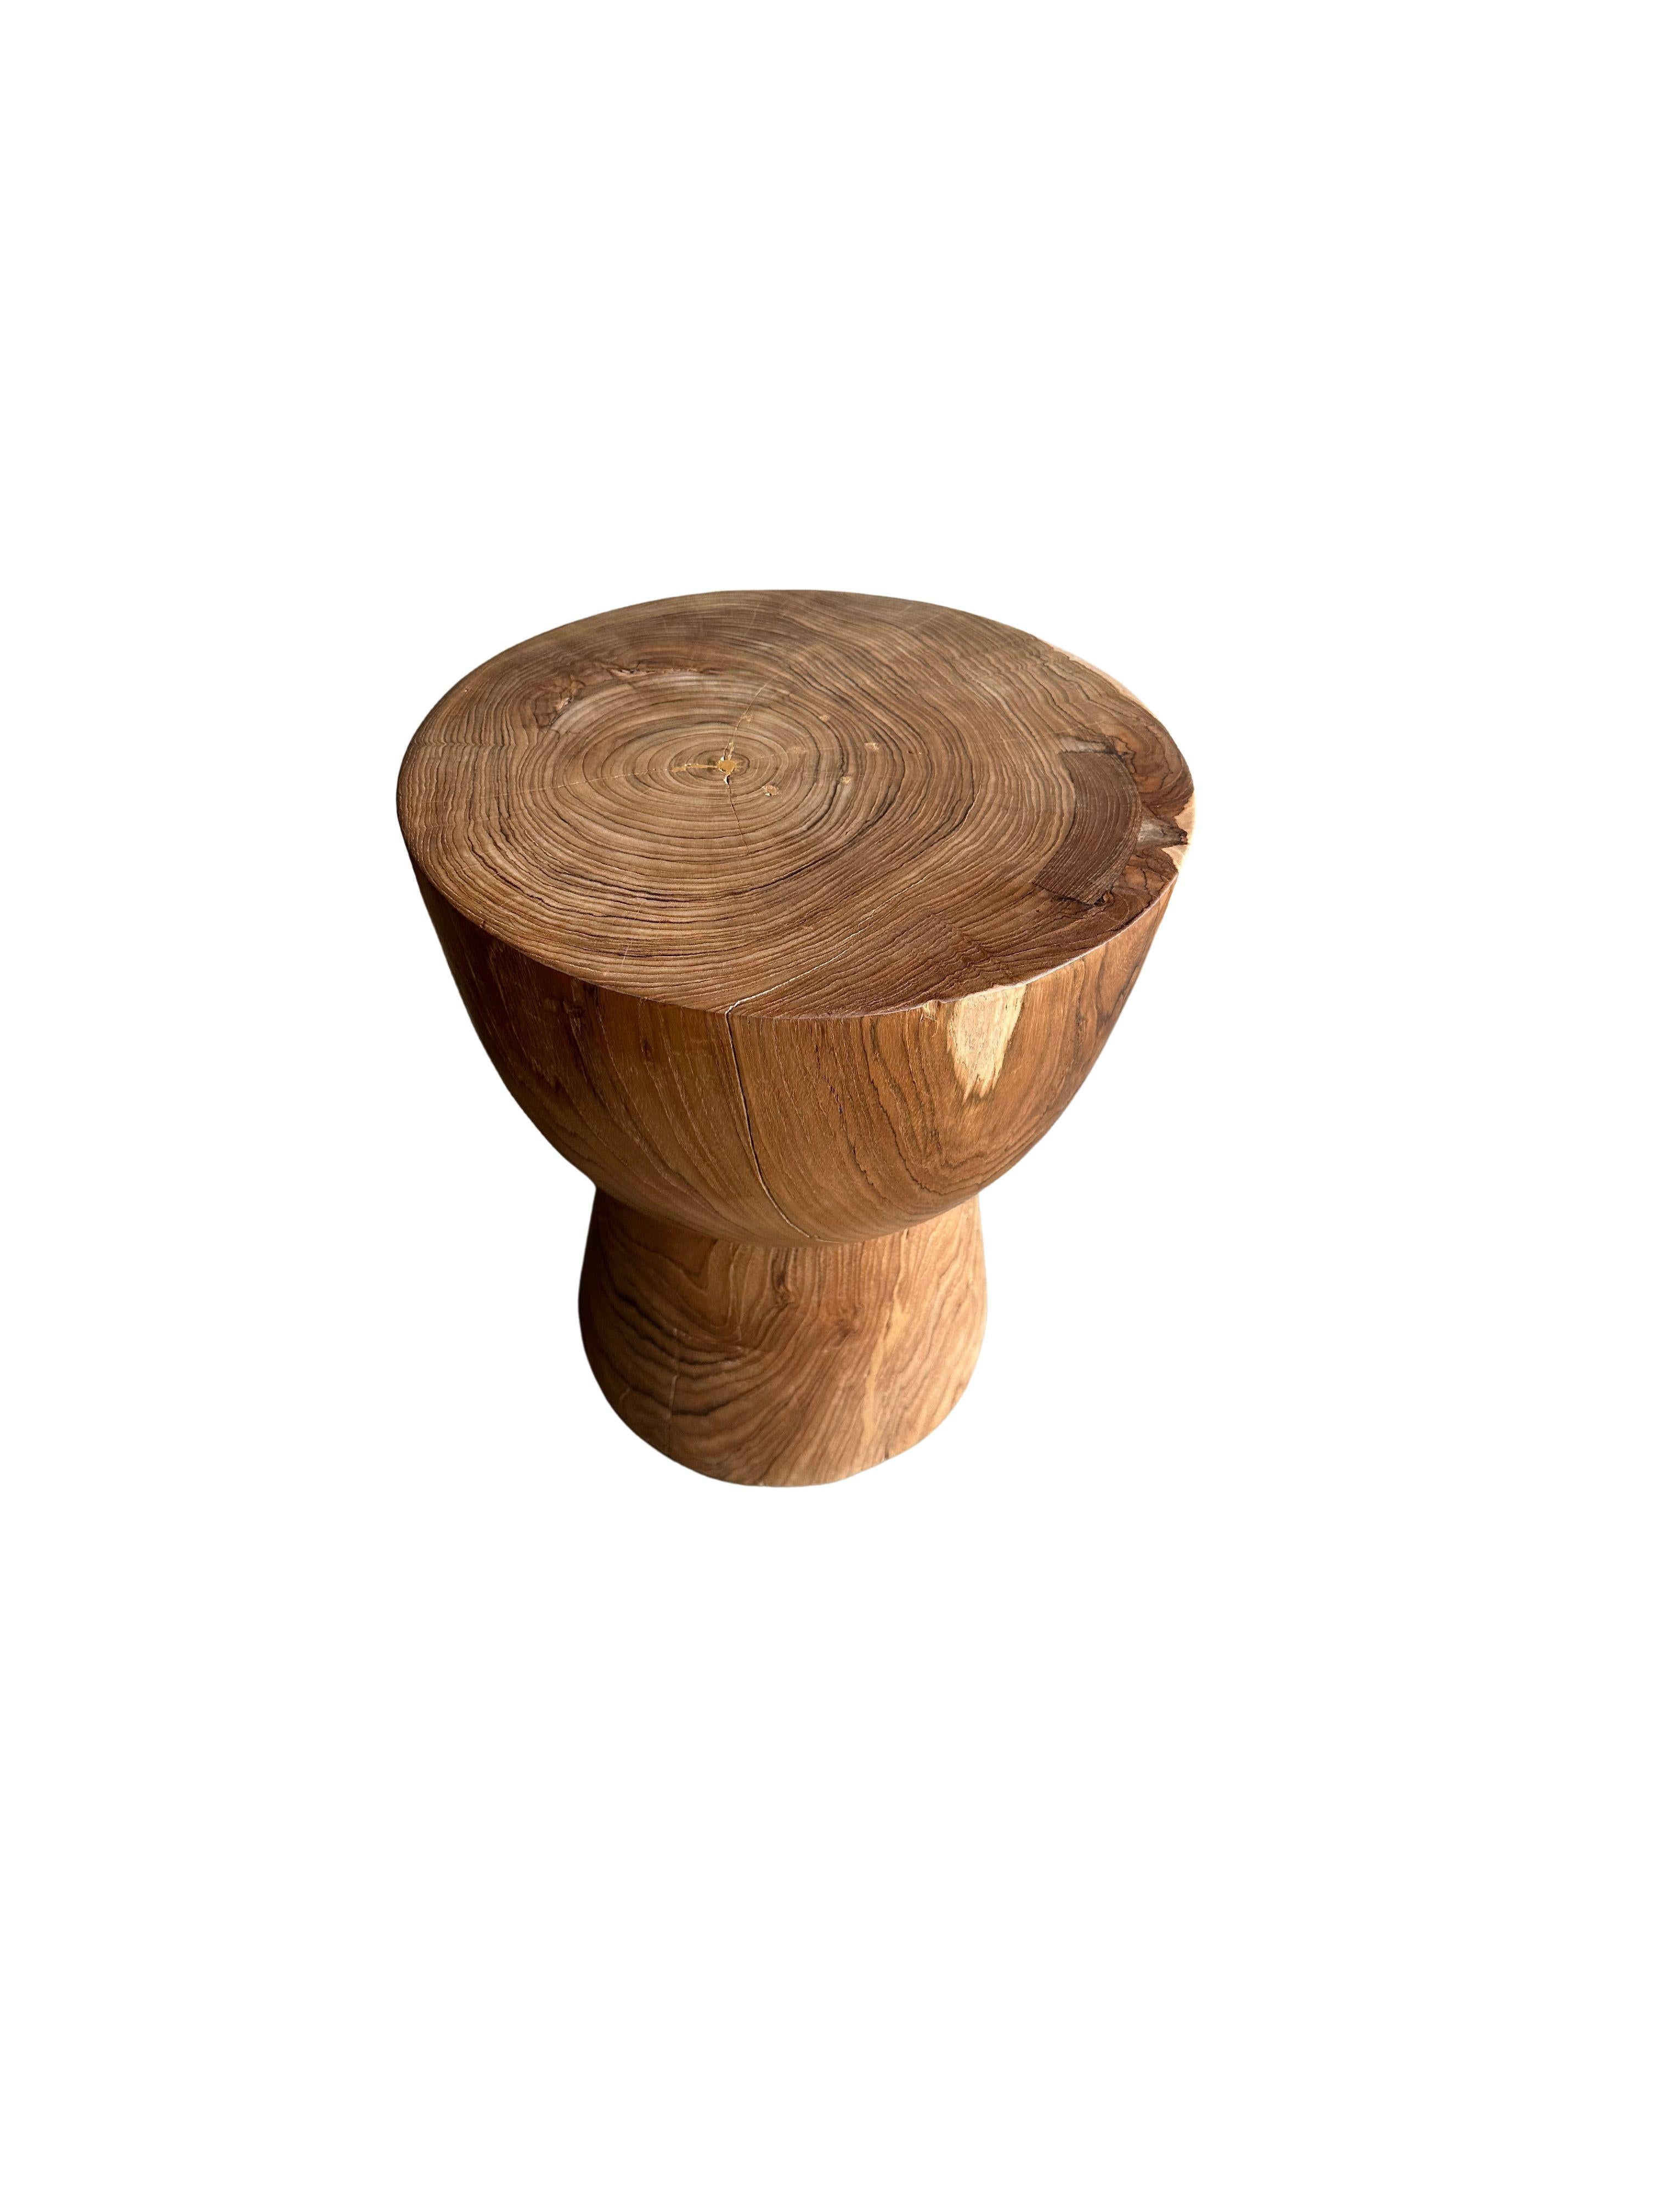 Organic Modern Sculptural Teak Wood Side Table, with Stunning Wood Textures, Modern Organic